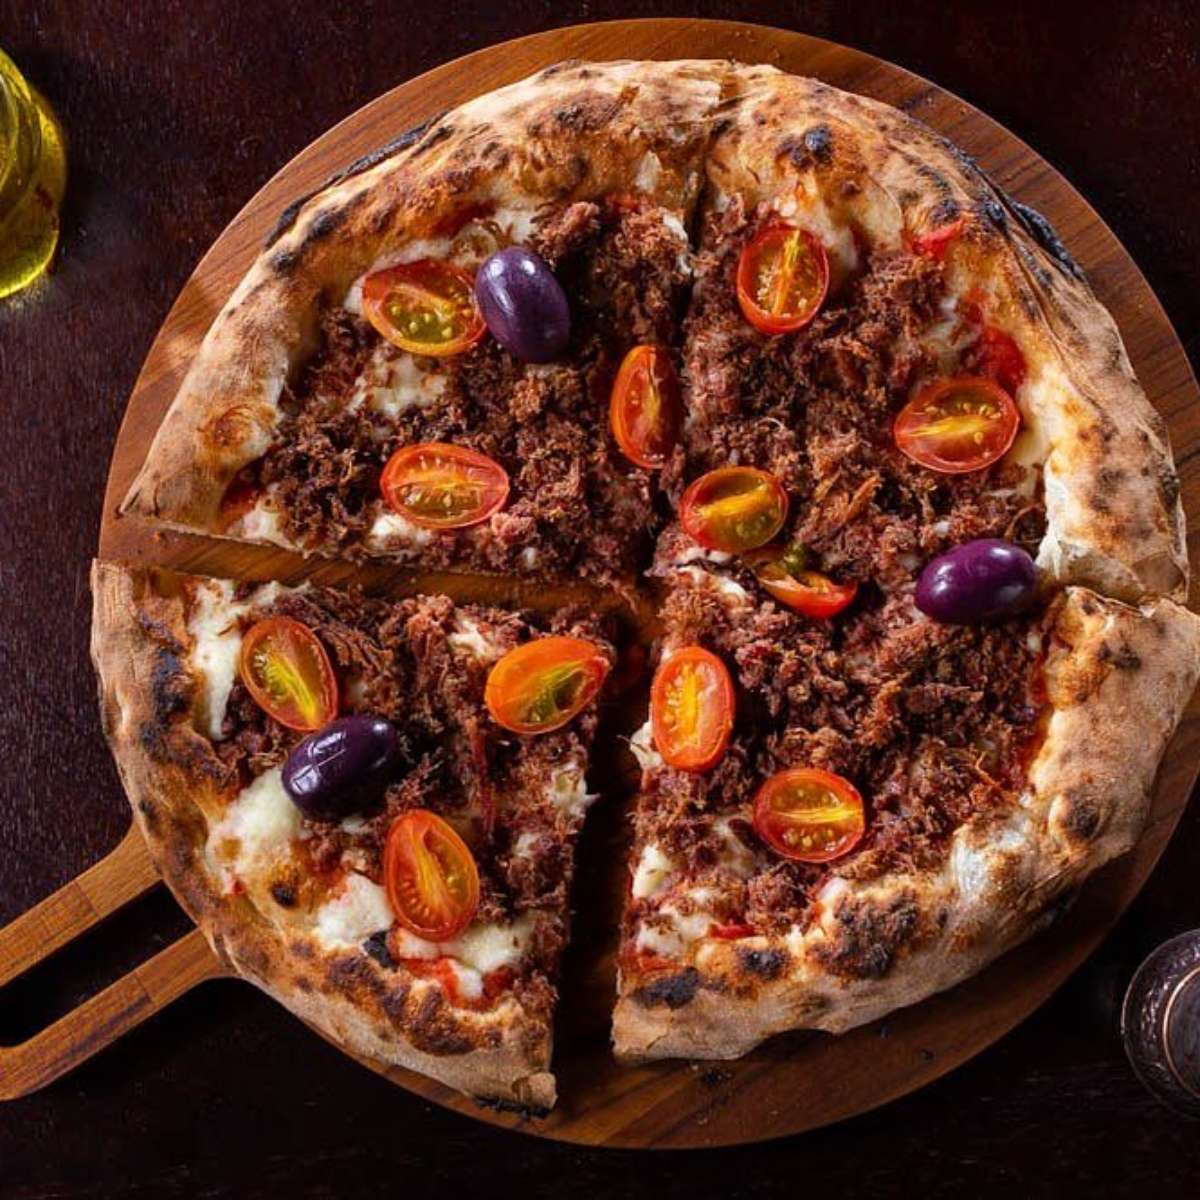 La Braciera conquista clientes com pizza napolitana e ingredientes premium  - Mercado&Consumo